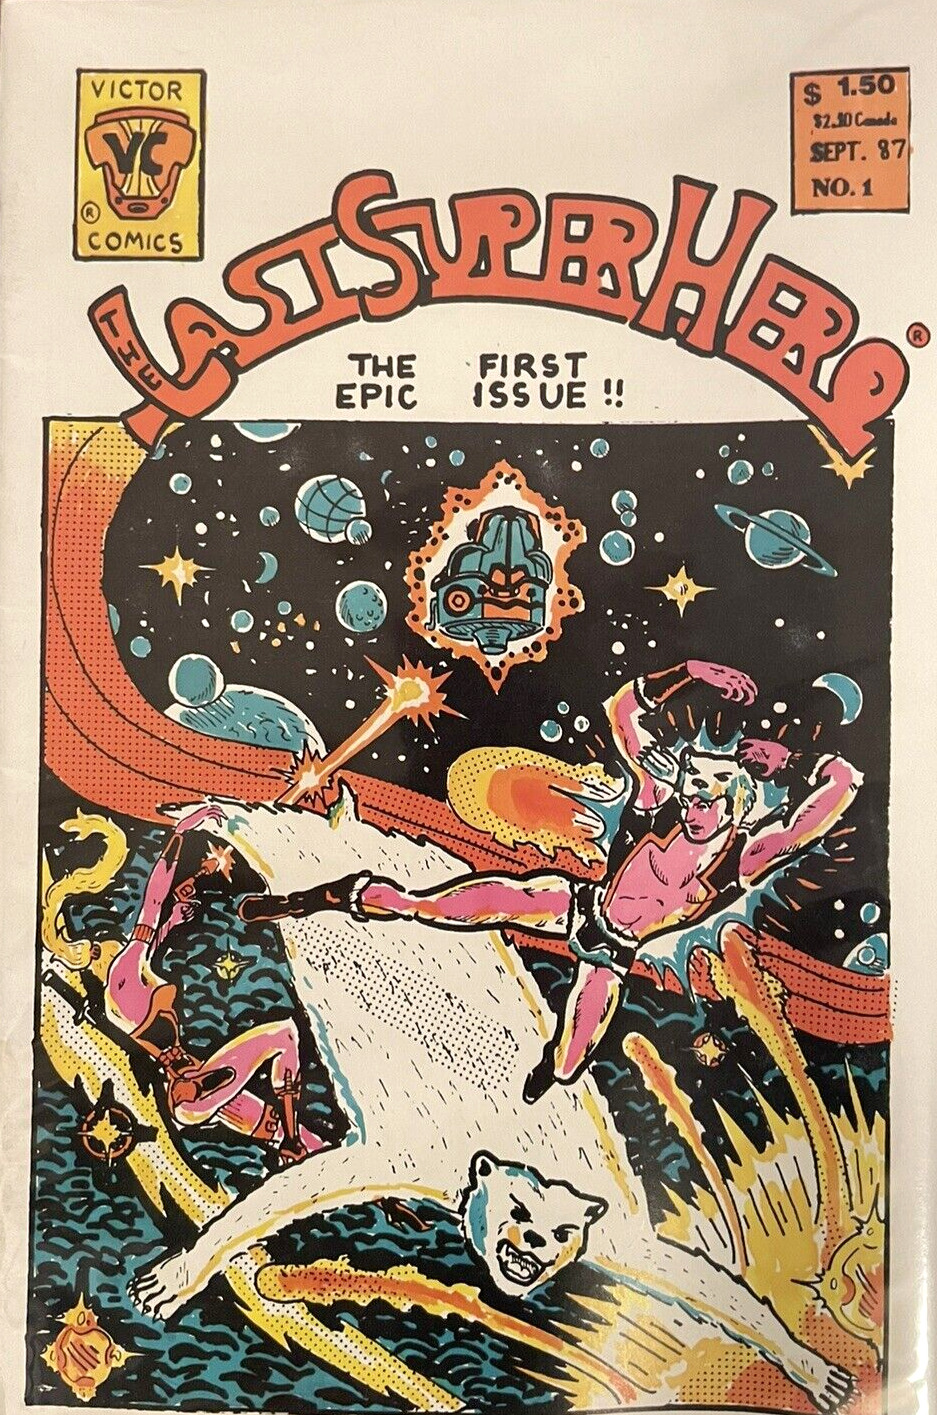 1987 Victor Comics: The Last Super Hero #1 Super RARE- Vintage Comic